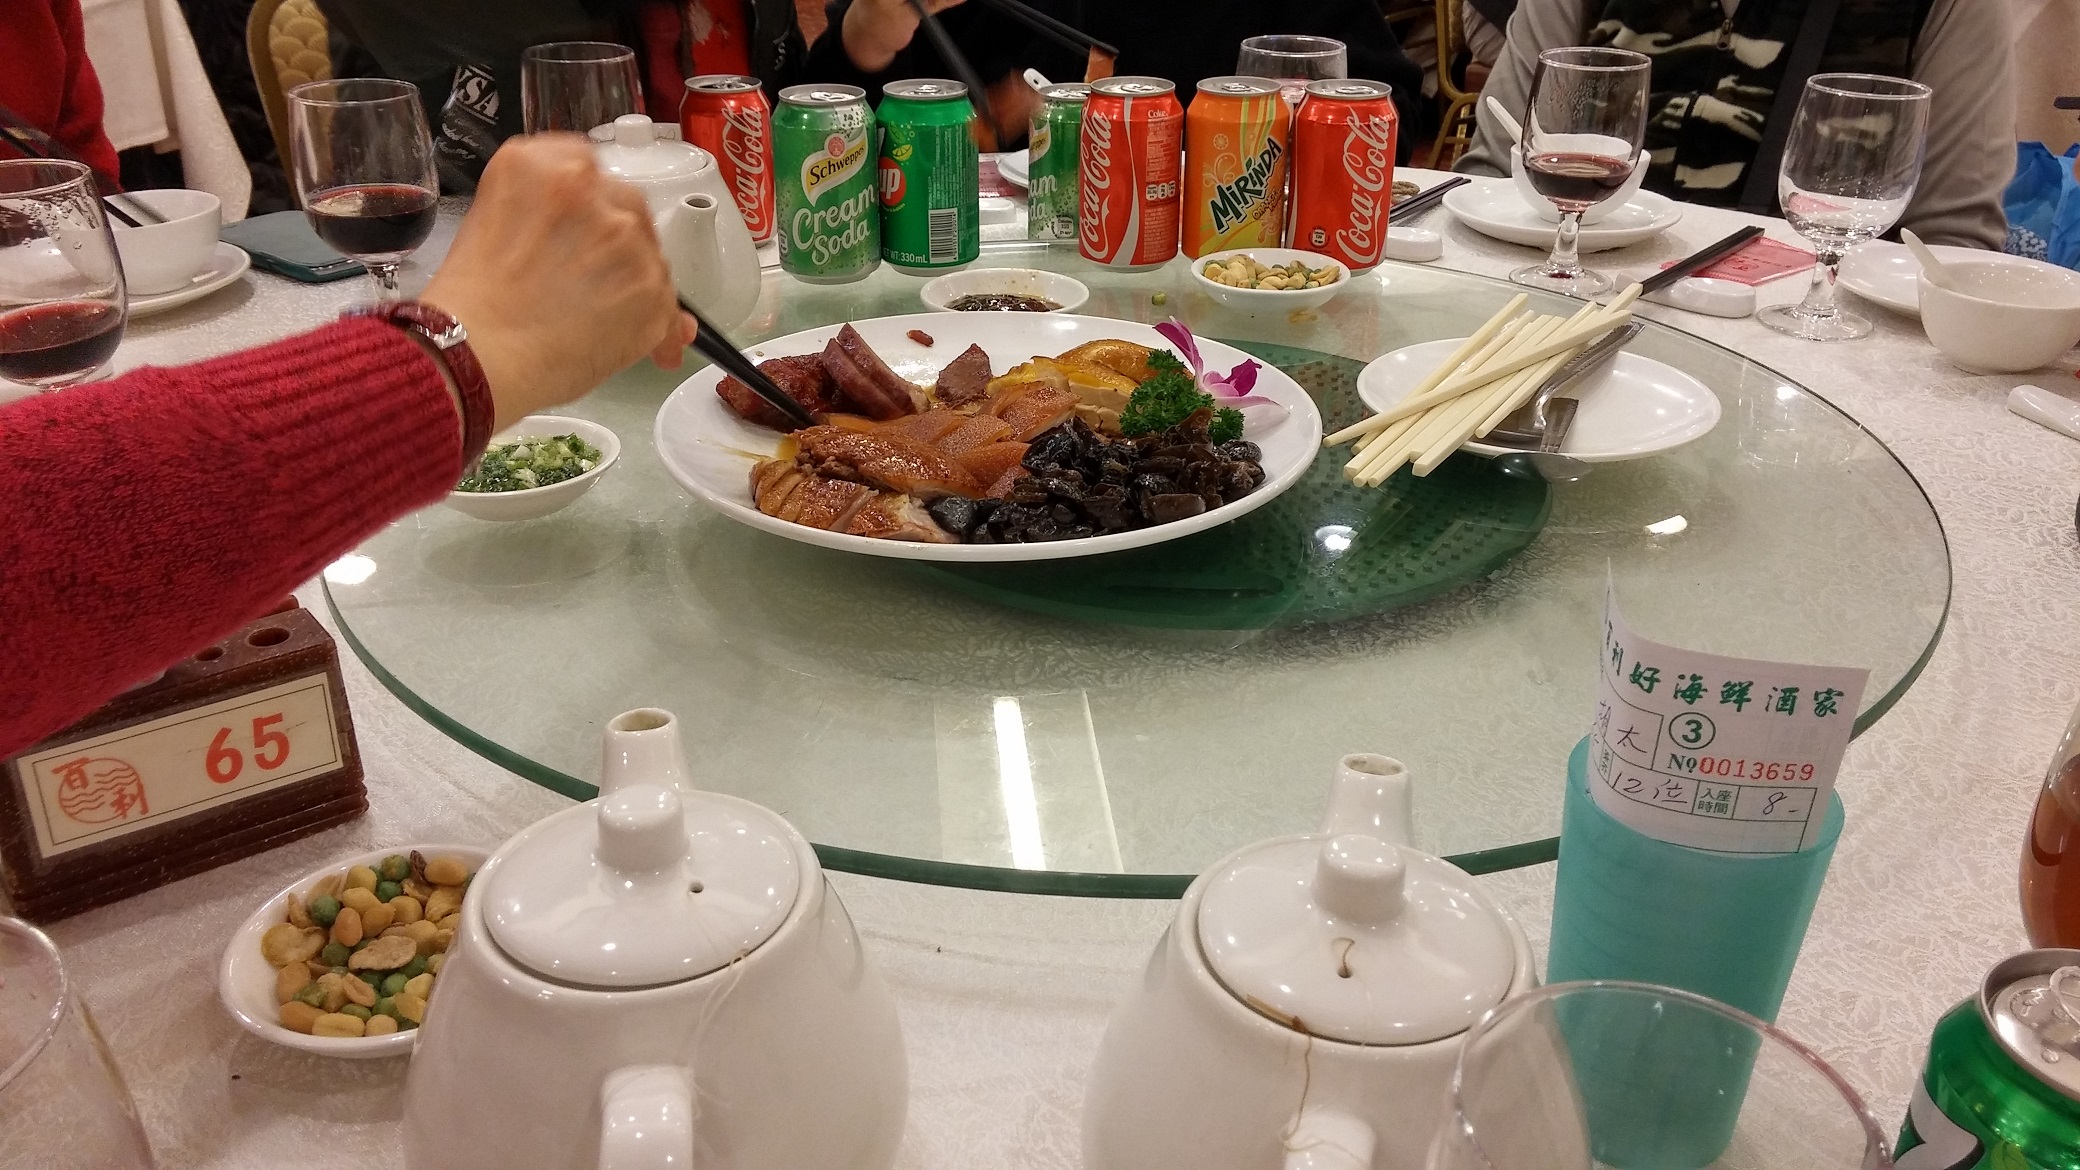 banquet start, tea pot, cokes, Chinese barbecue assortments